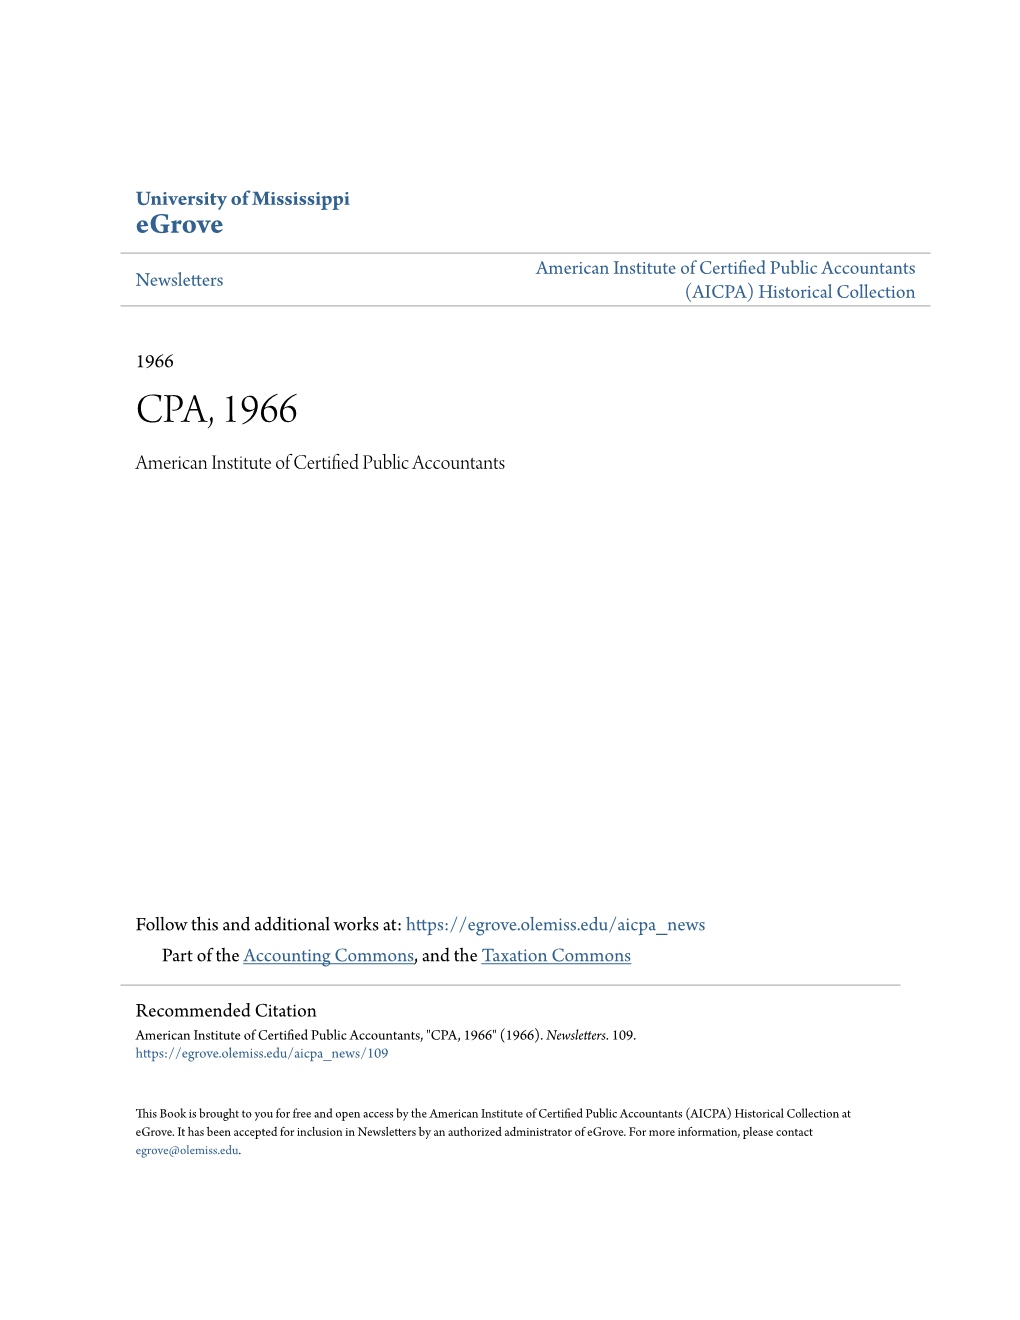 CPA, 1966 American Institute of Certified Public Accountants